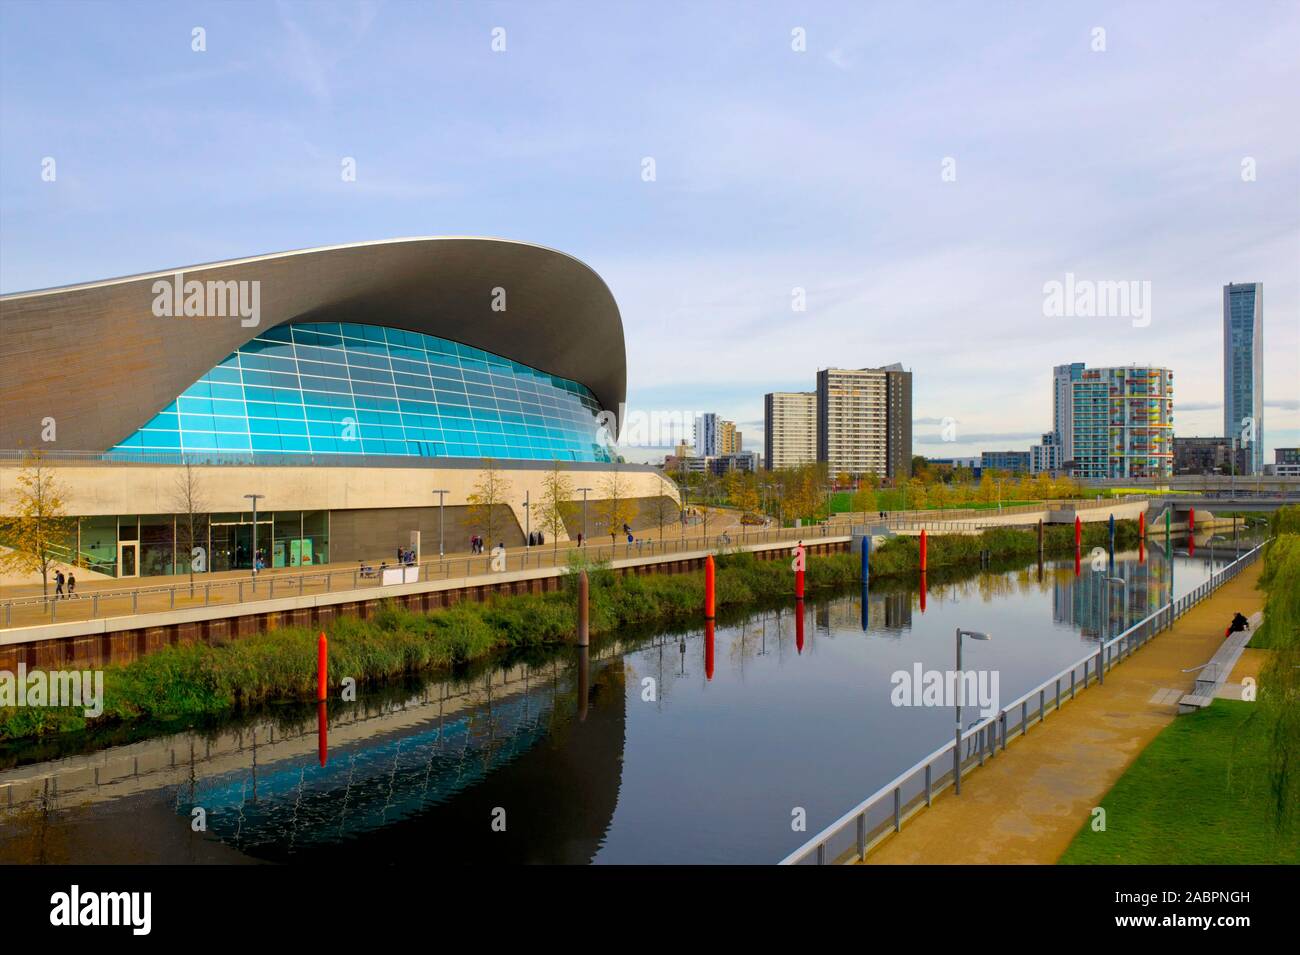 The Aquatics Centre - Part of the 2012 Olympic park - London. Stock Photo